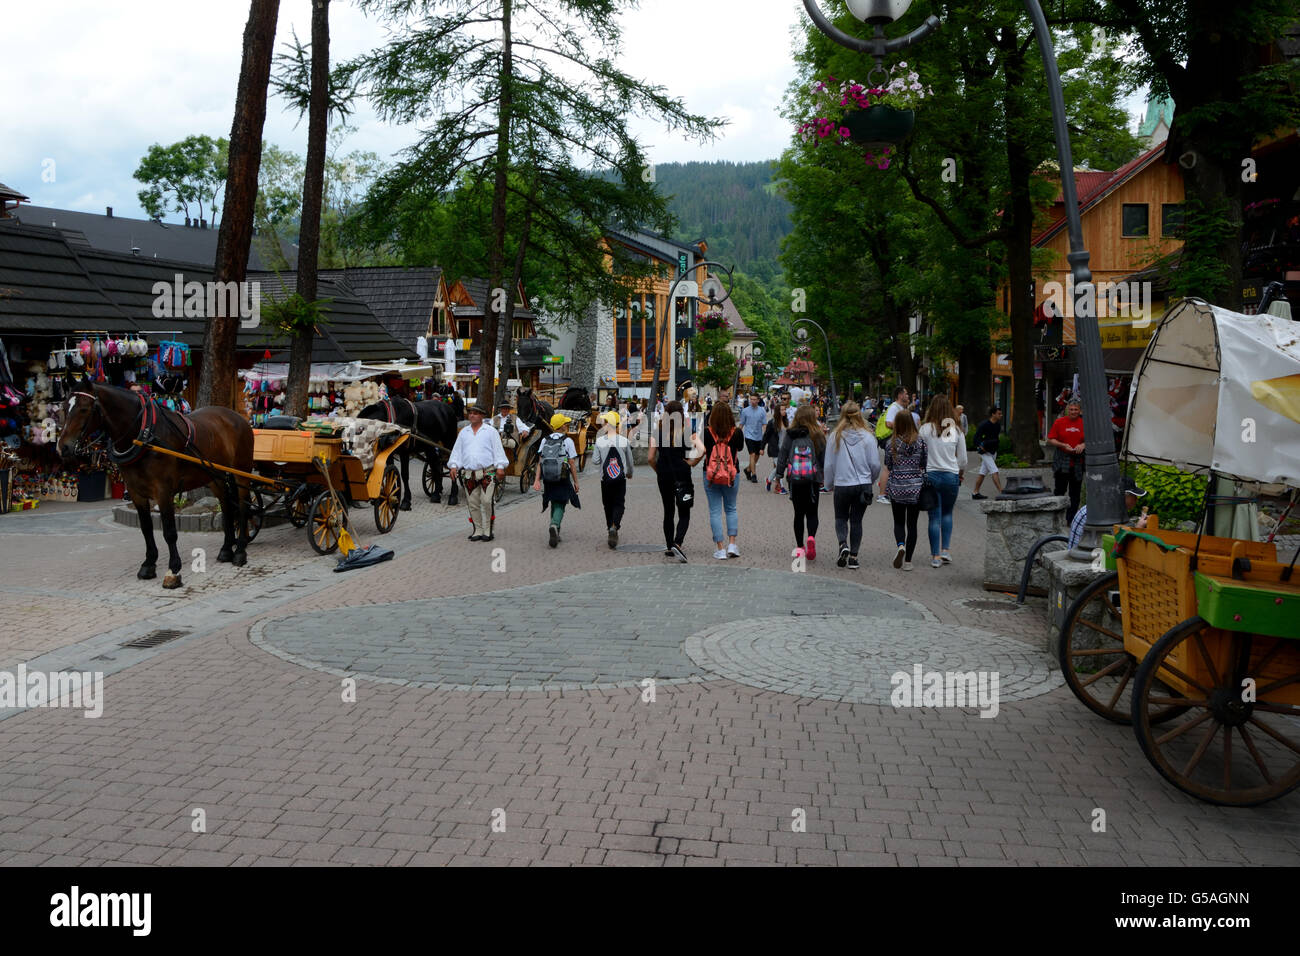 Zakopane, Poland - June 15, 2016: Krupowki street in Zakopane in Poland. Unidentified people visible. Stock Photo